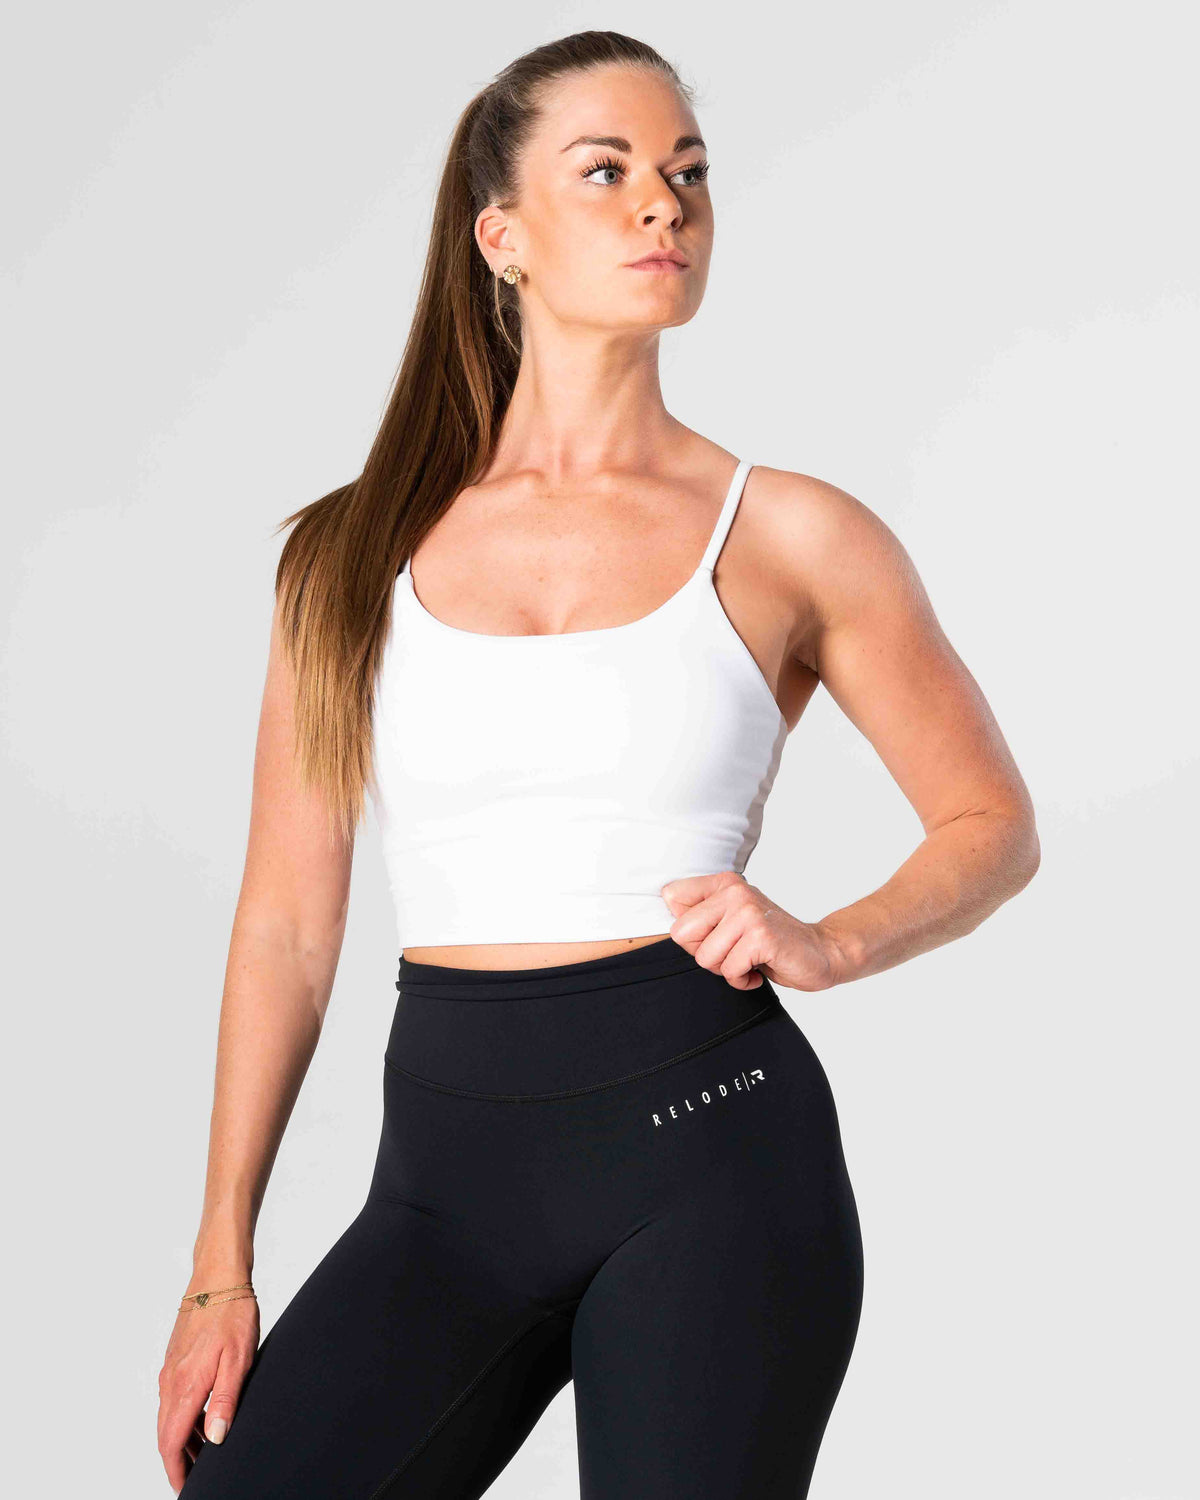 Bestel hier uw Marrald Soft Dry Sportshirt Dames Roze XL - trainings korte  mouwen fitness crossfit yoga shirt